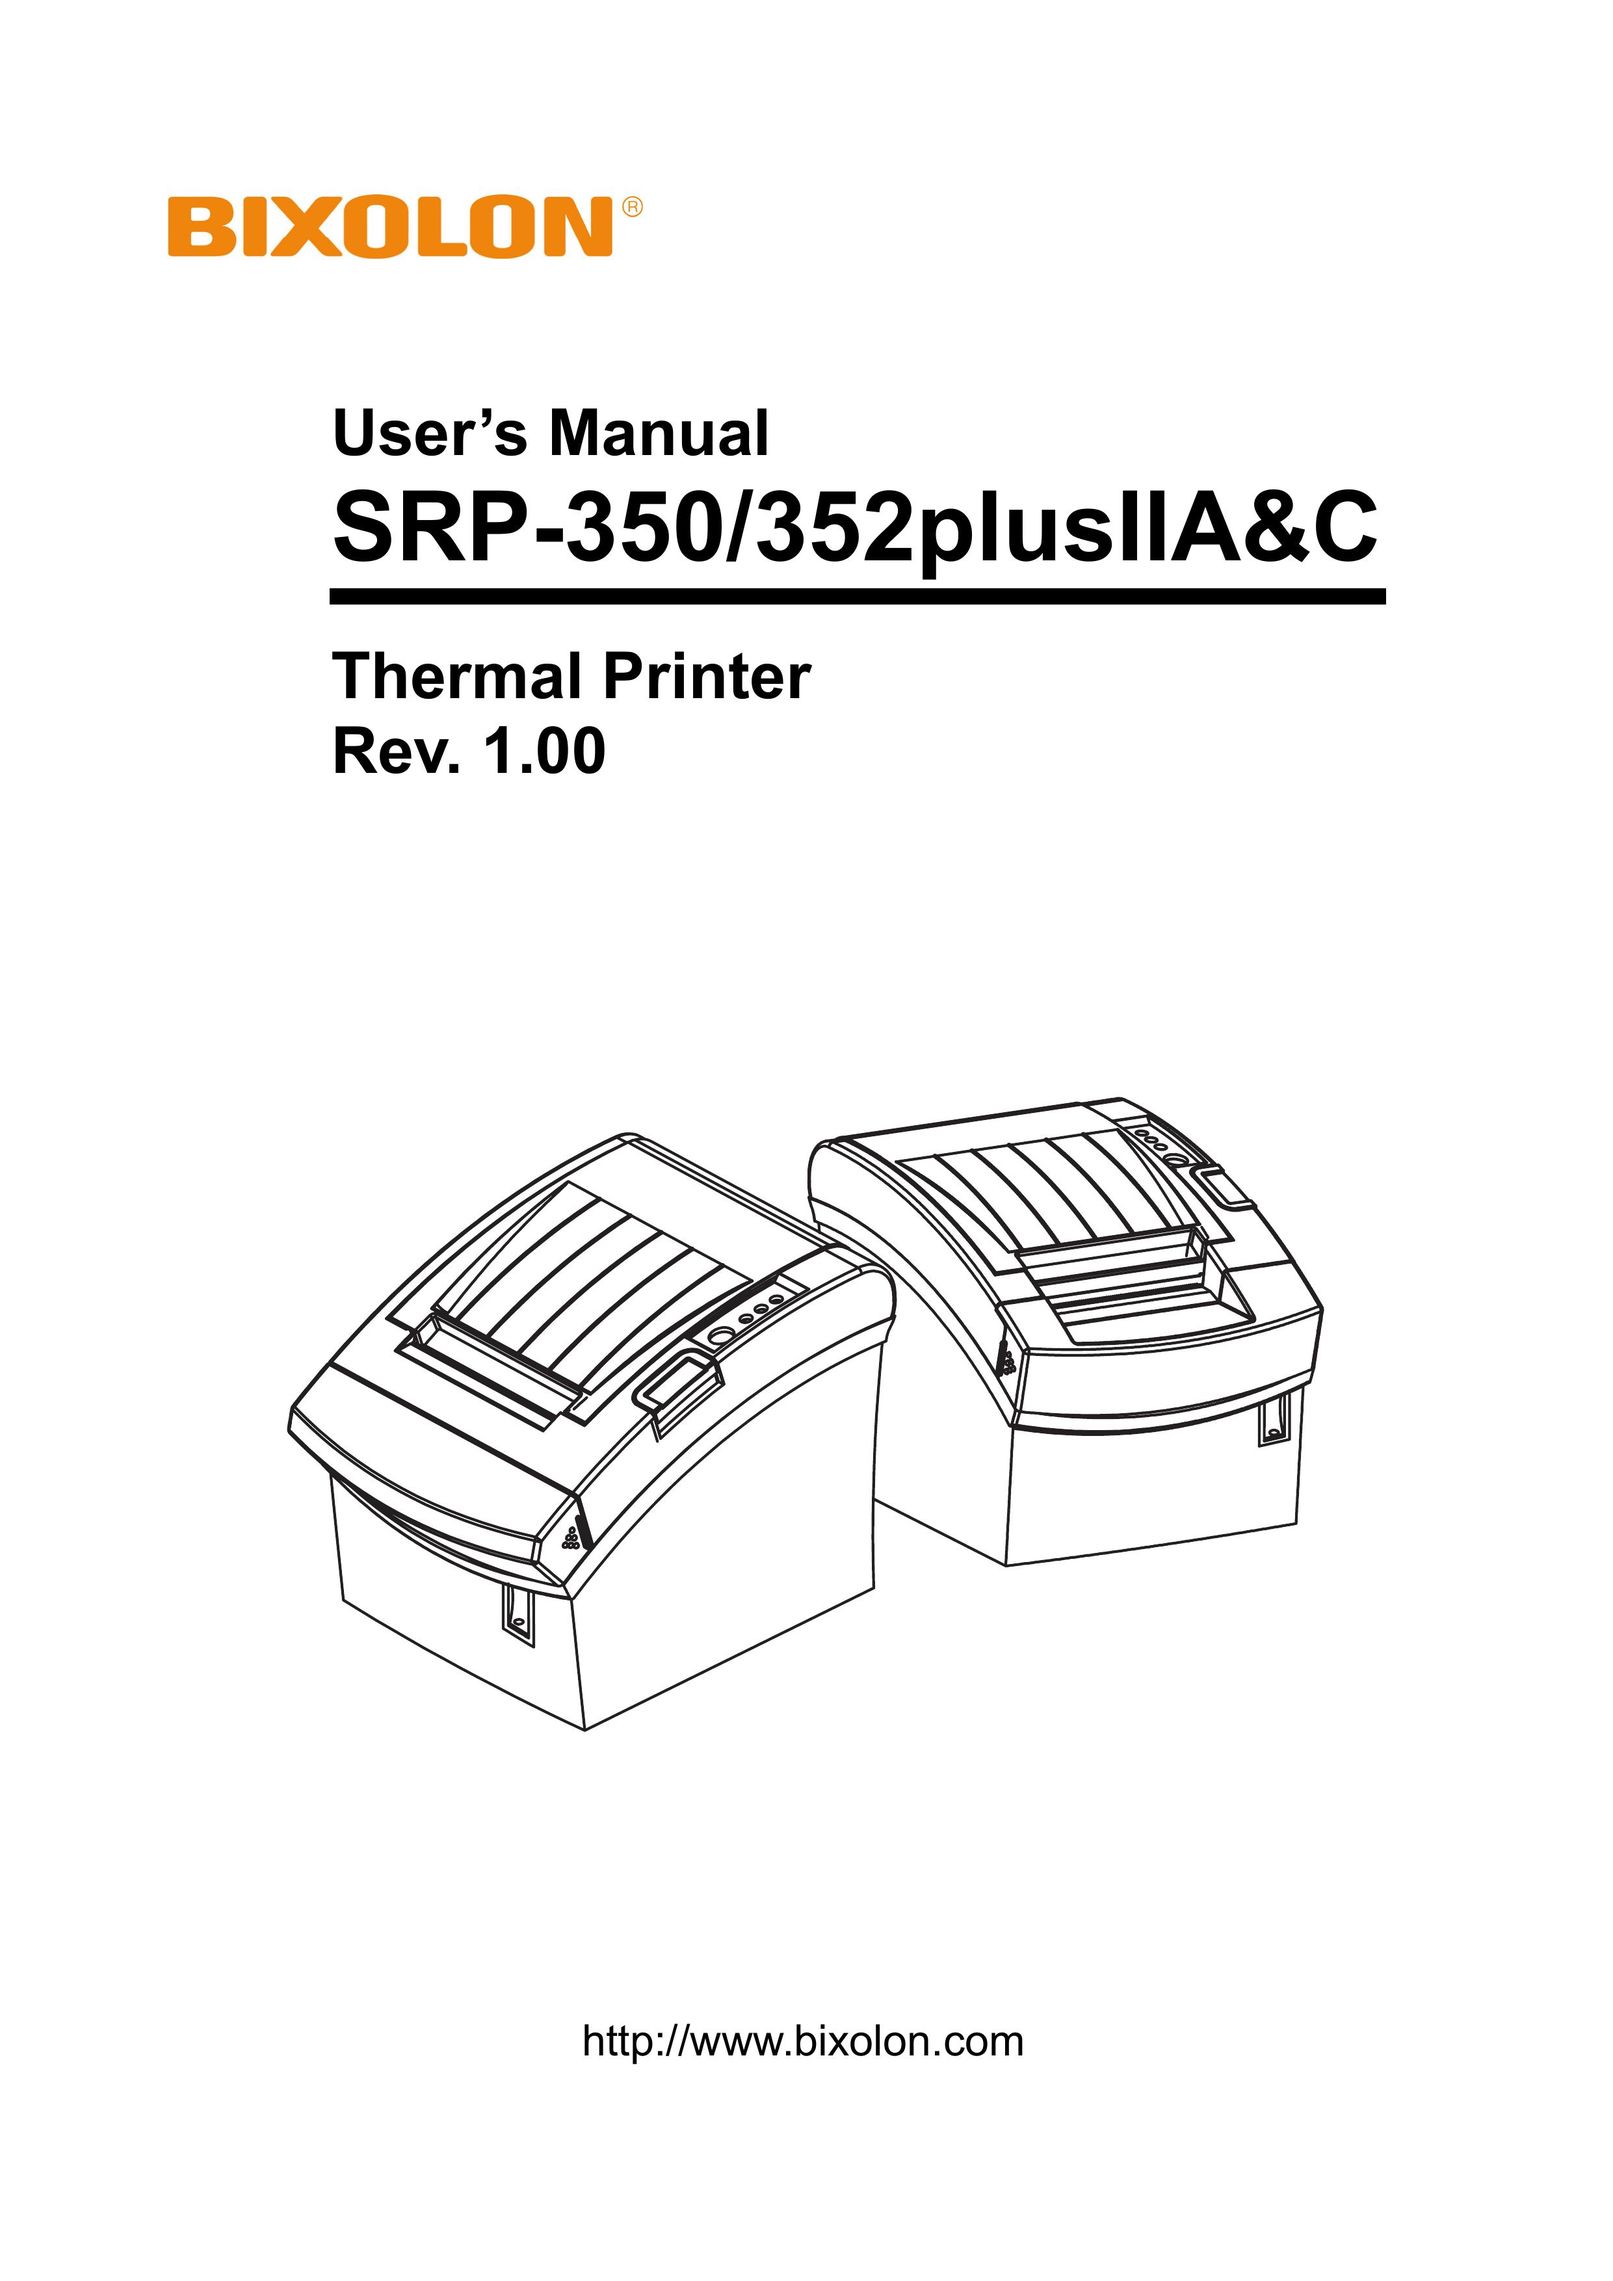 BIXOLON SRP-352 Printer User Manual